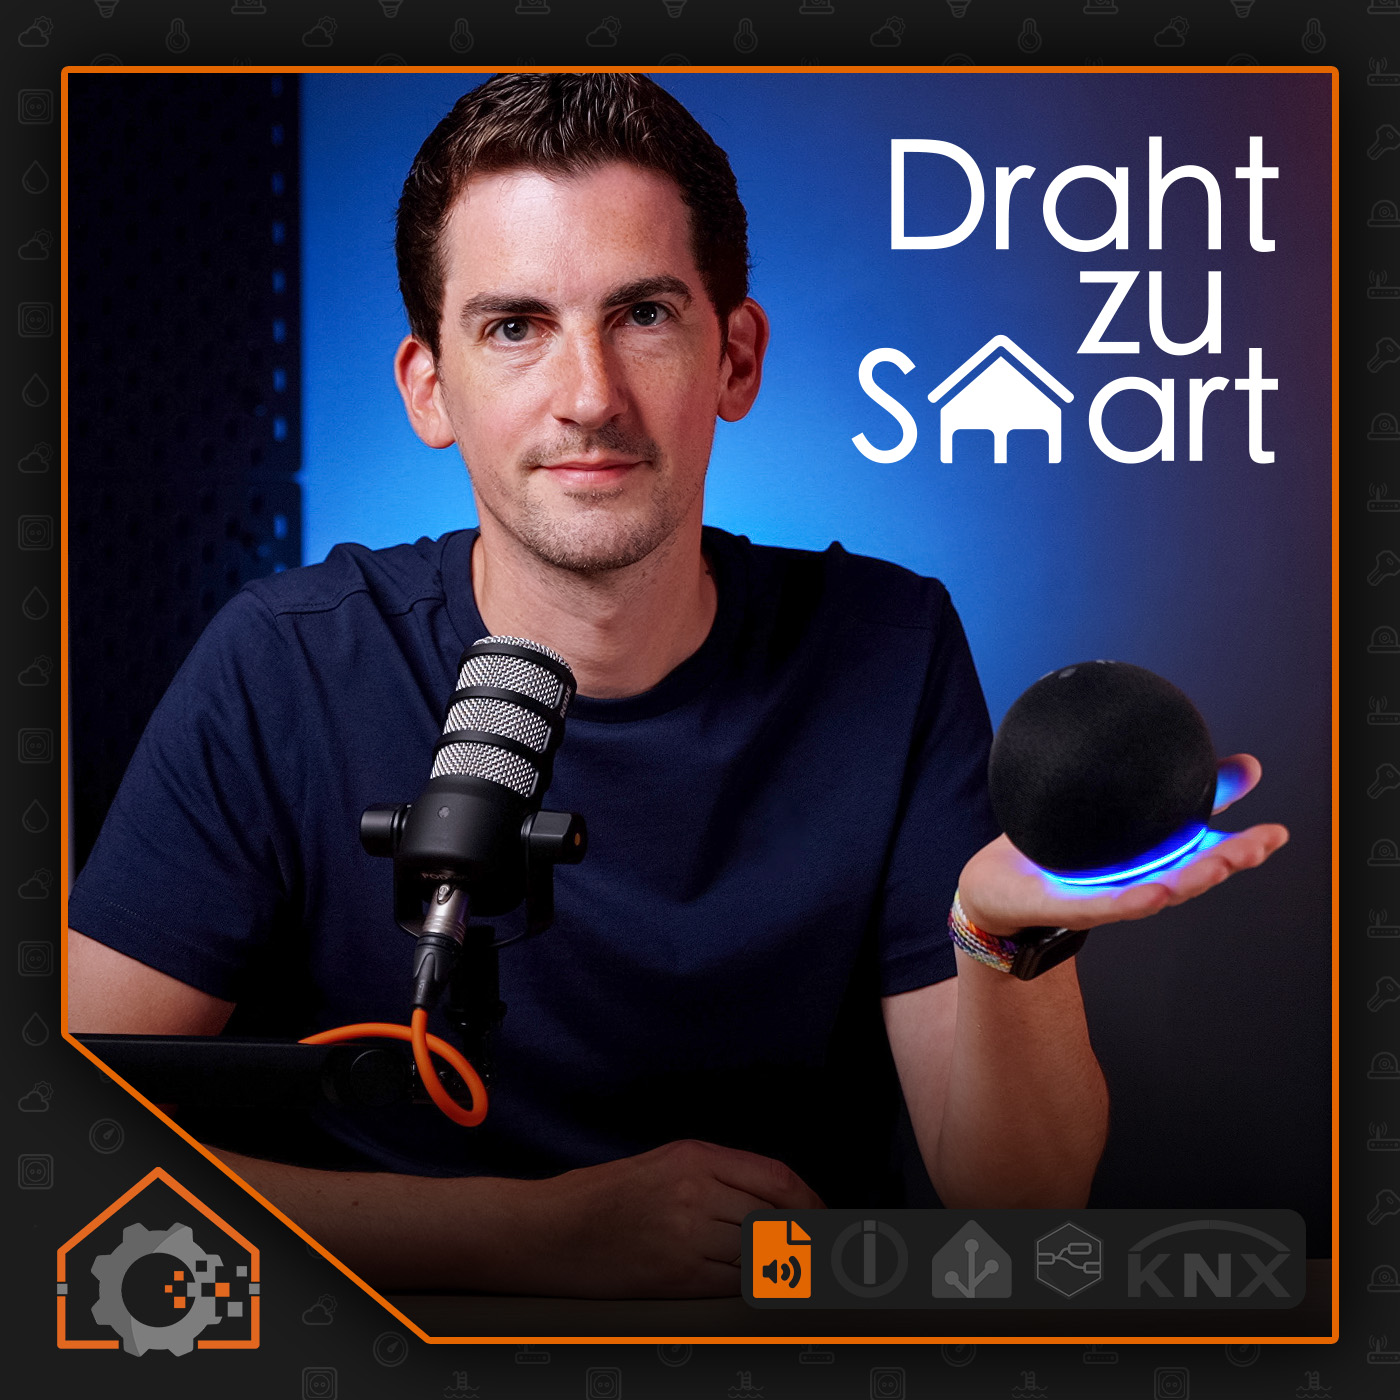 Draht zu Smart (Podcast)